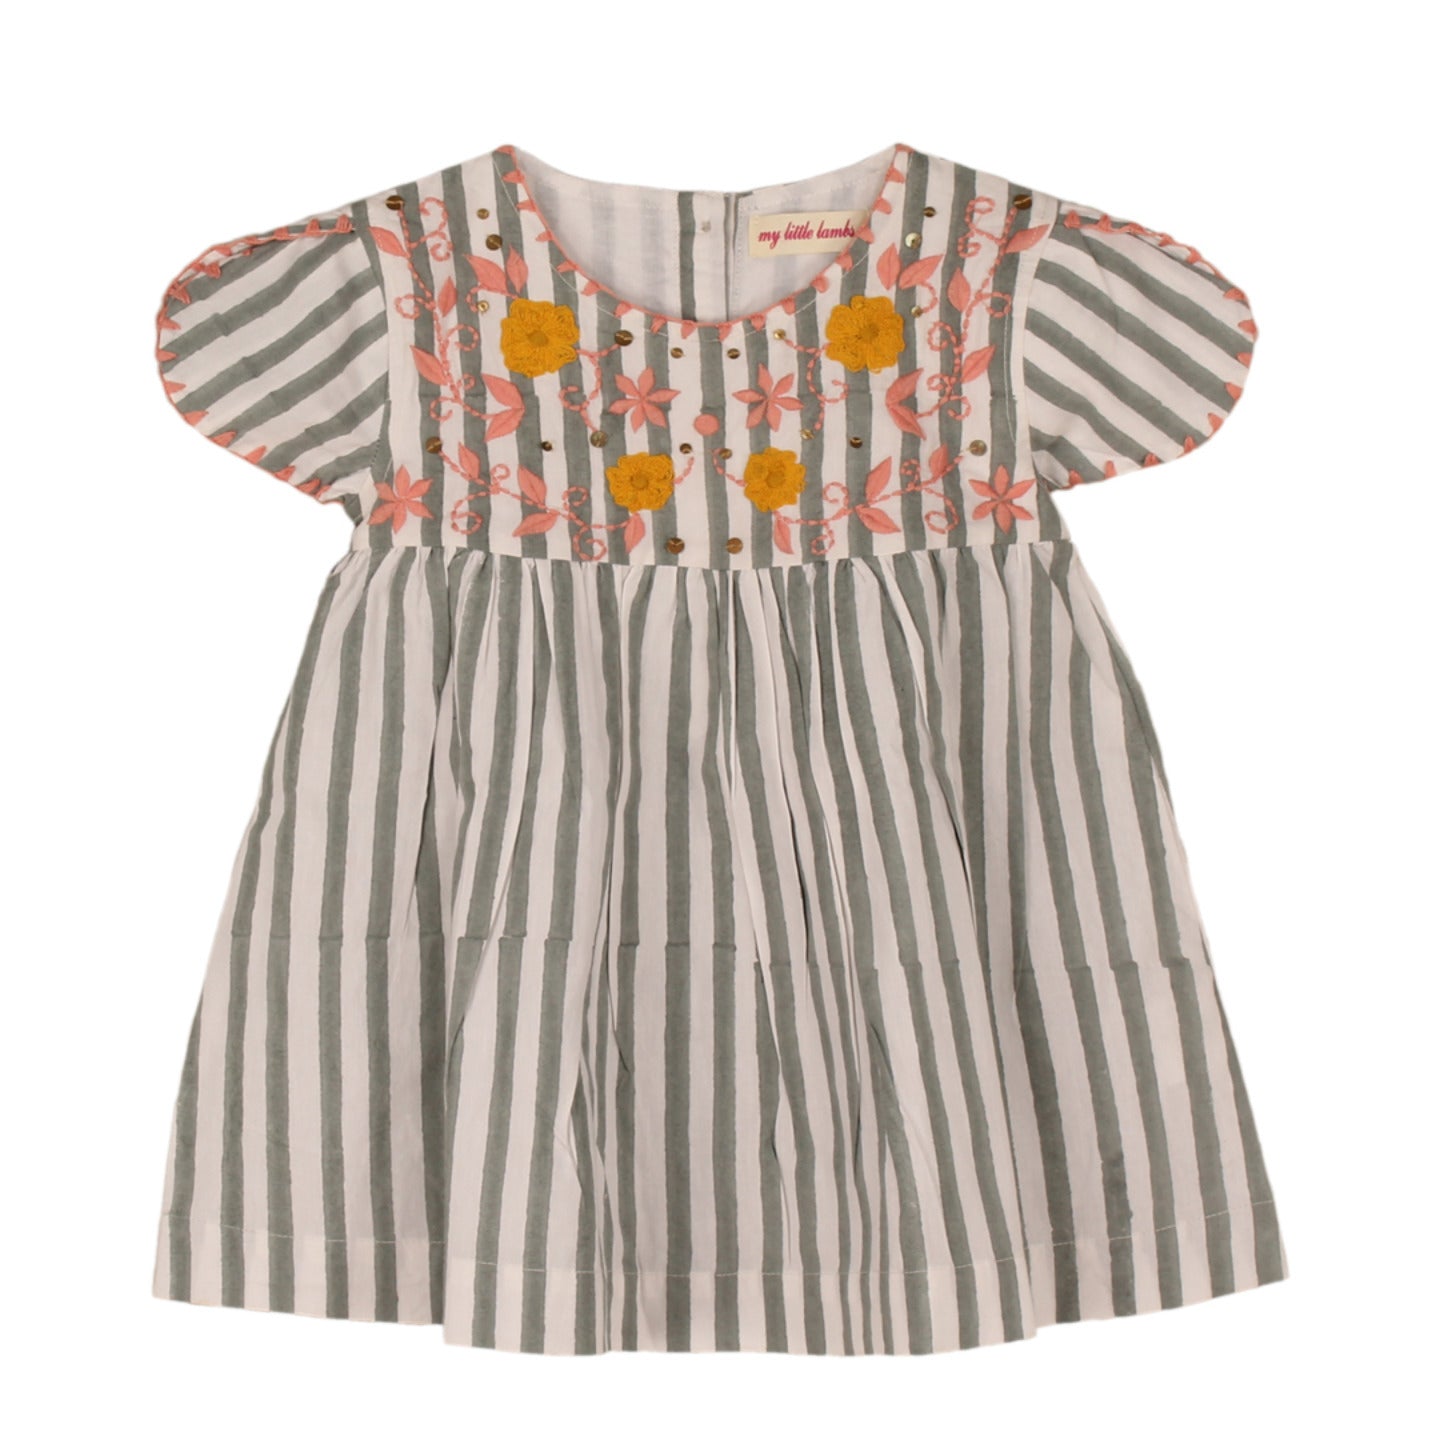 Block printed Baby Girl's Dress Sansa Striped Grey